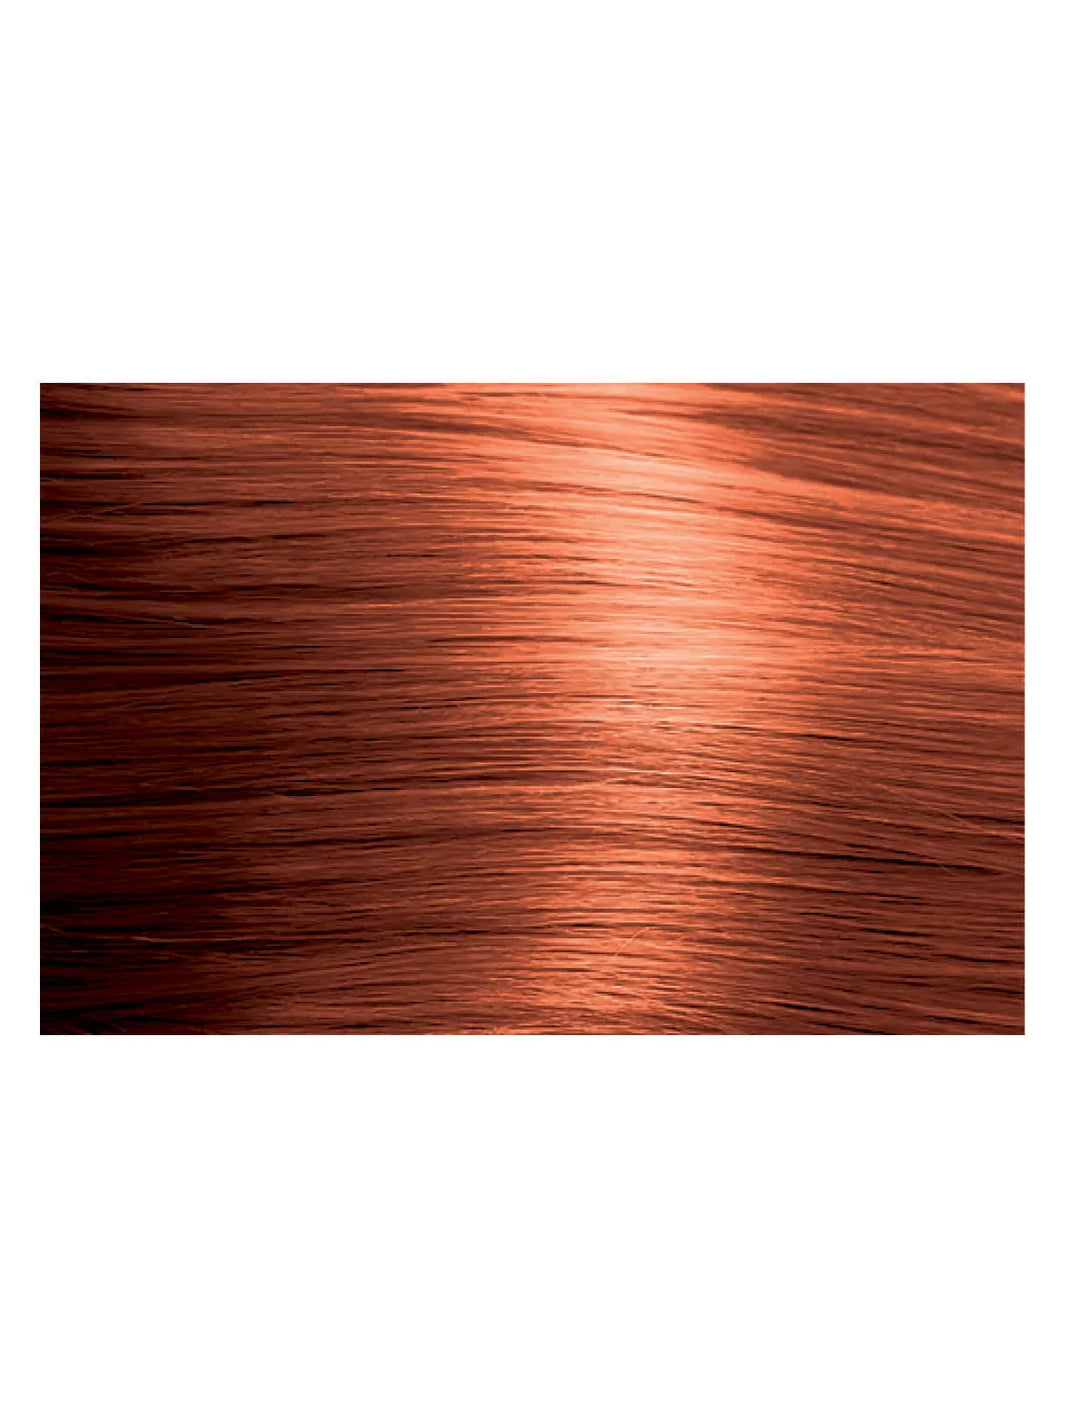 Calura Gloss Copper Gold  -43/KG